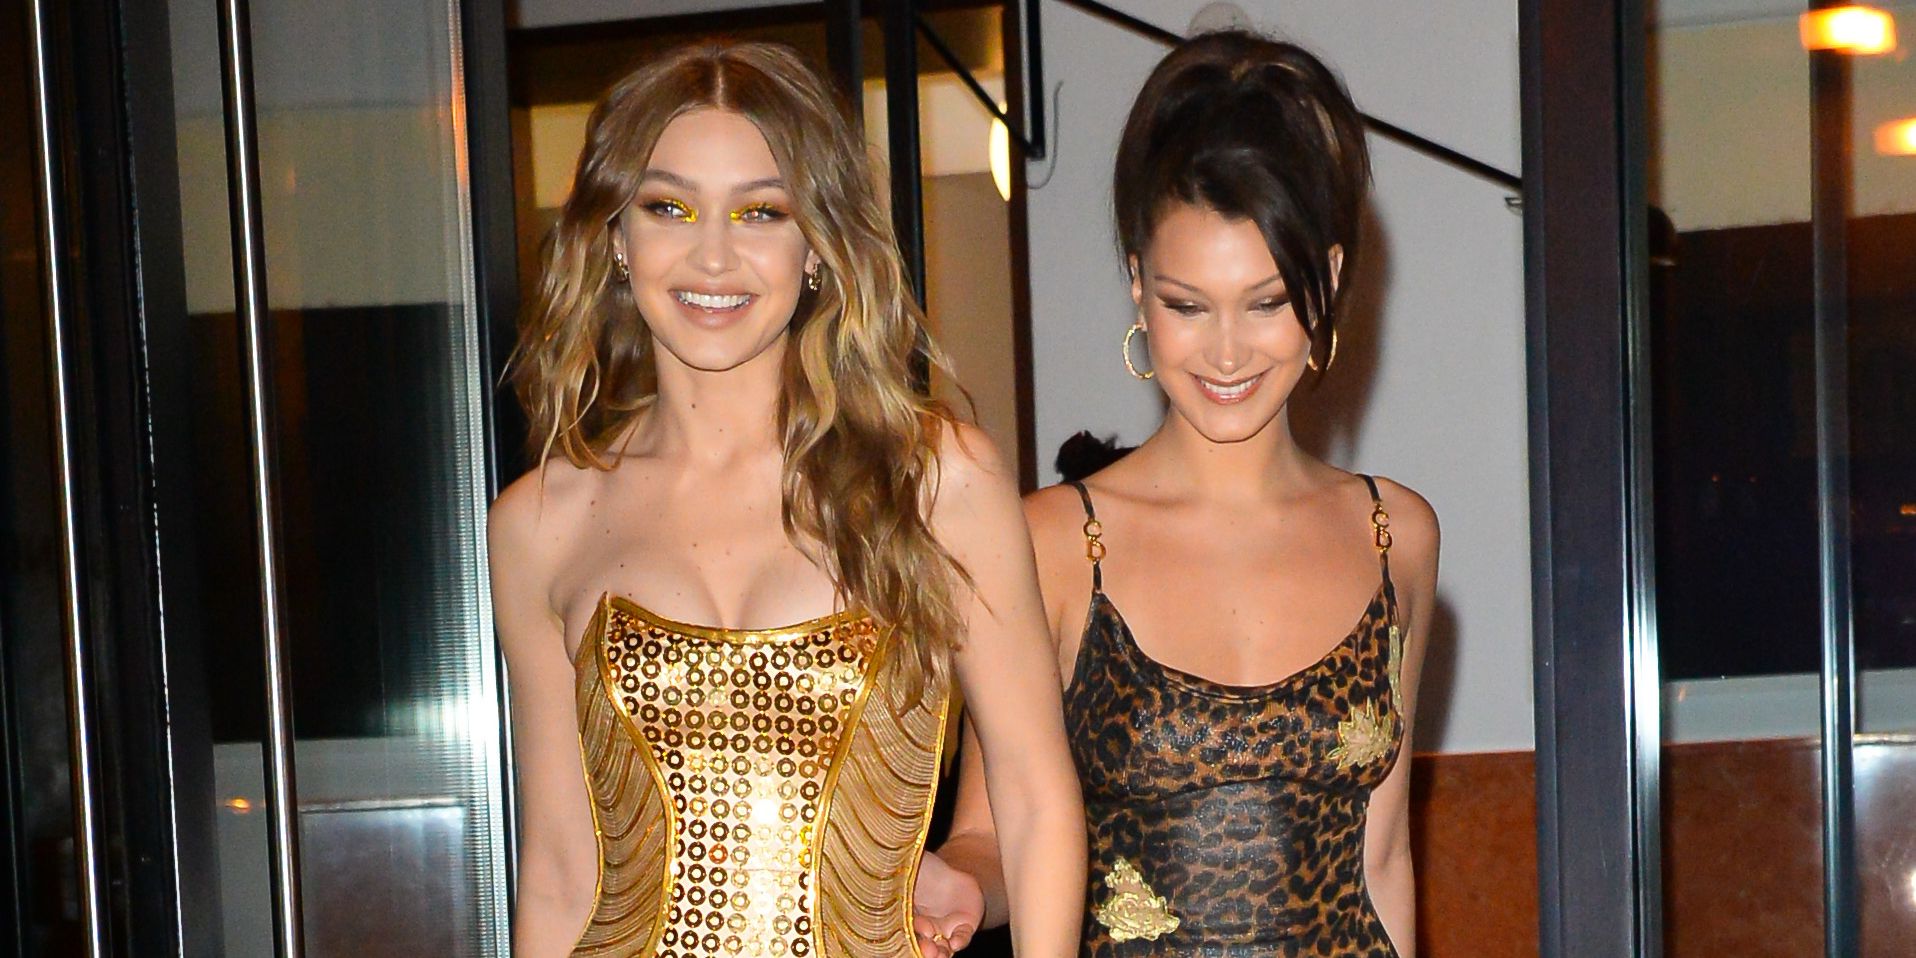 How Gigi Hadid, Olivia Culpo, Kendall Jenner Style Mini Bags